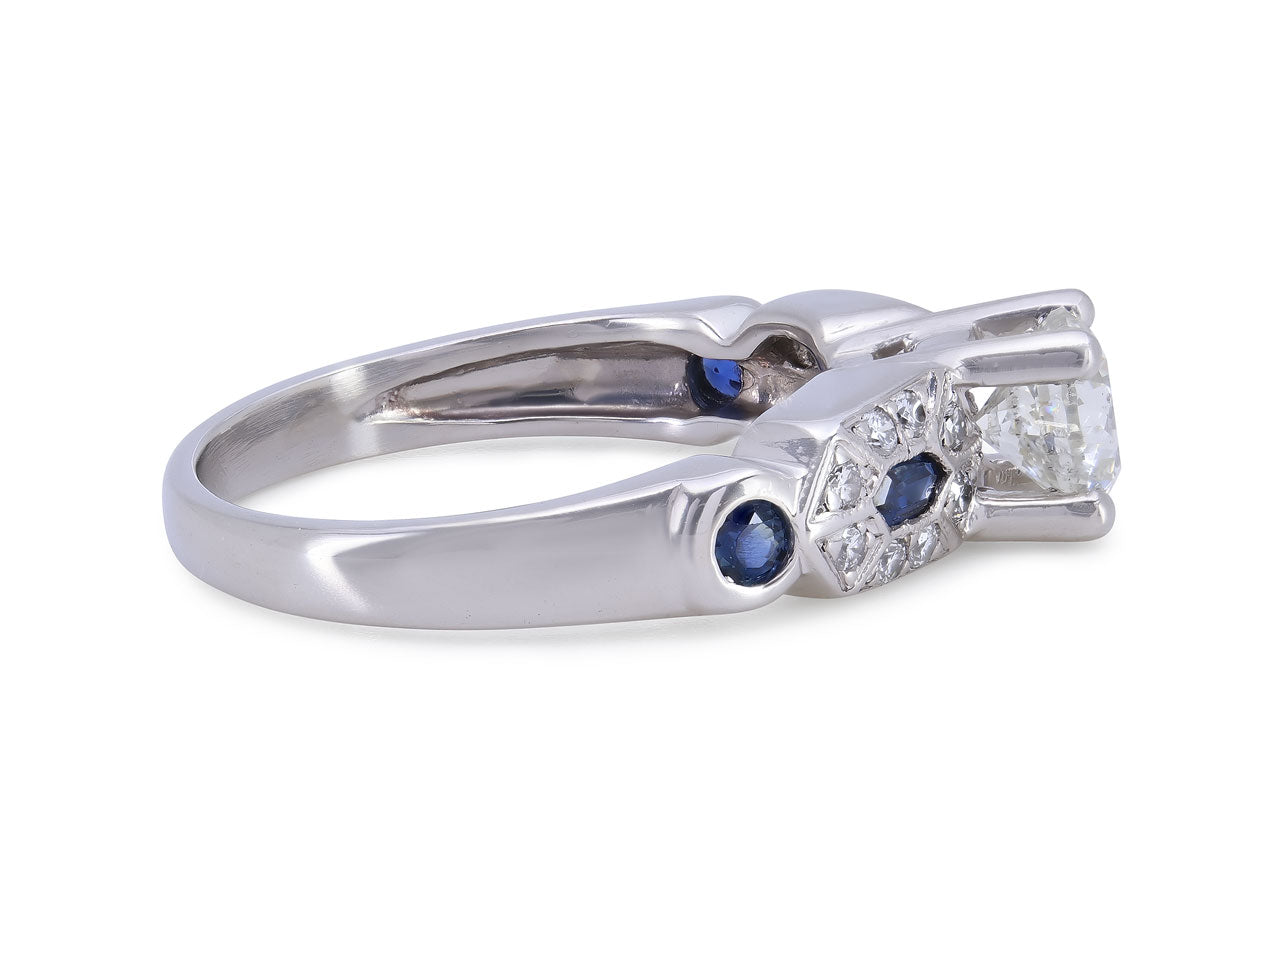 Tacori Diamond and Sapphire Ring in Platinum